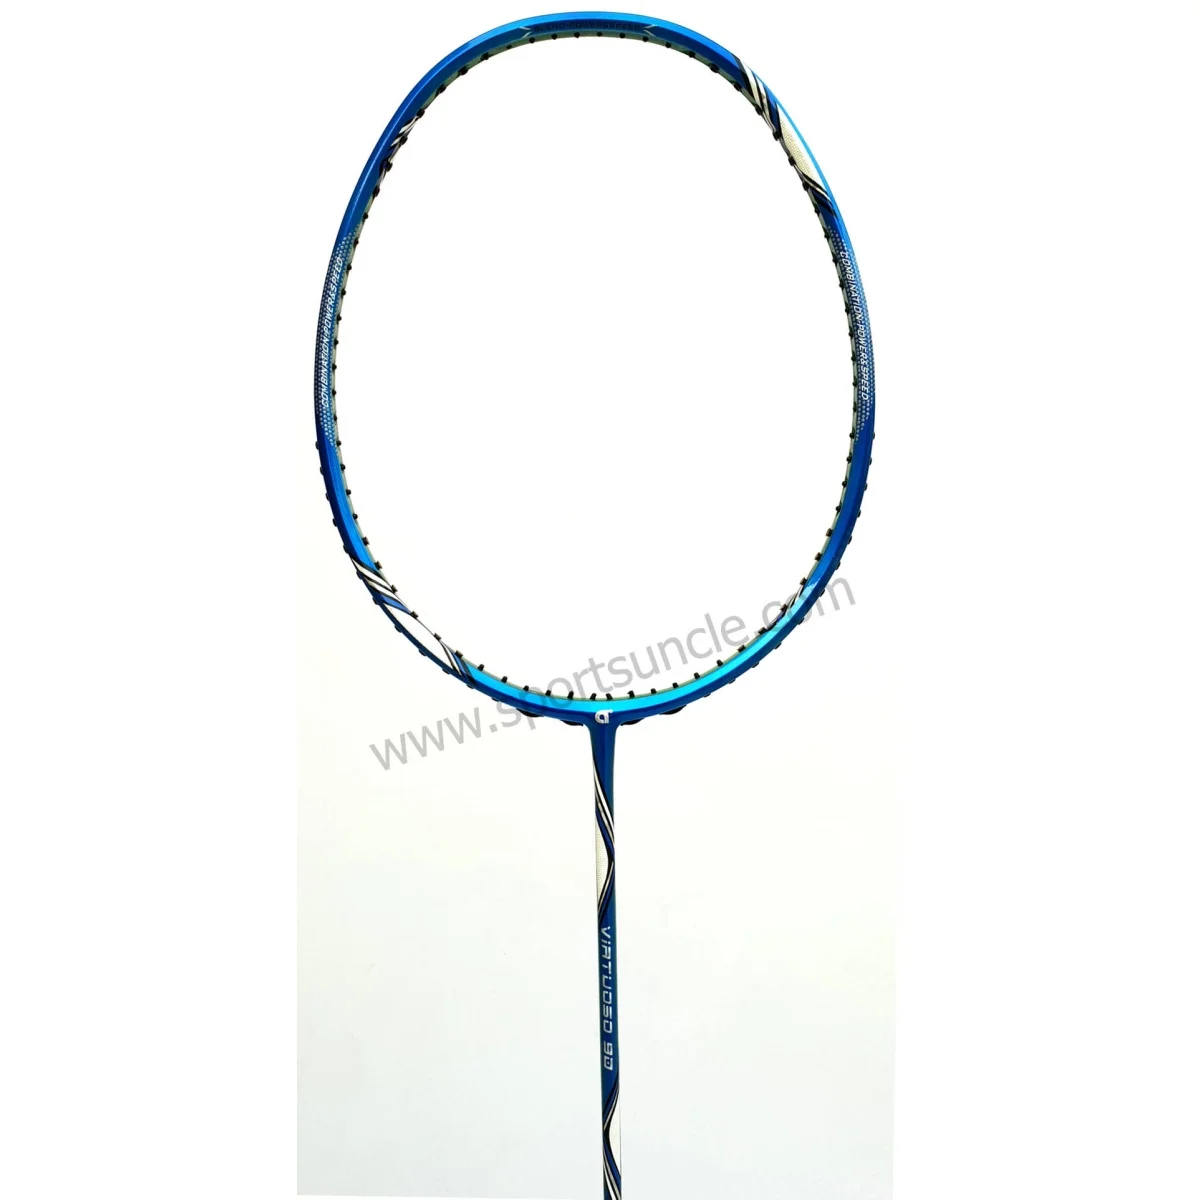 Buy Apacs Virtuoso 90 Badminton Racket